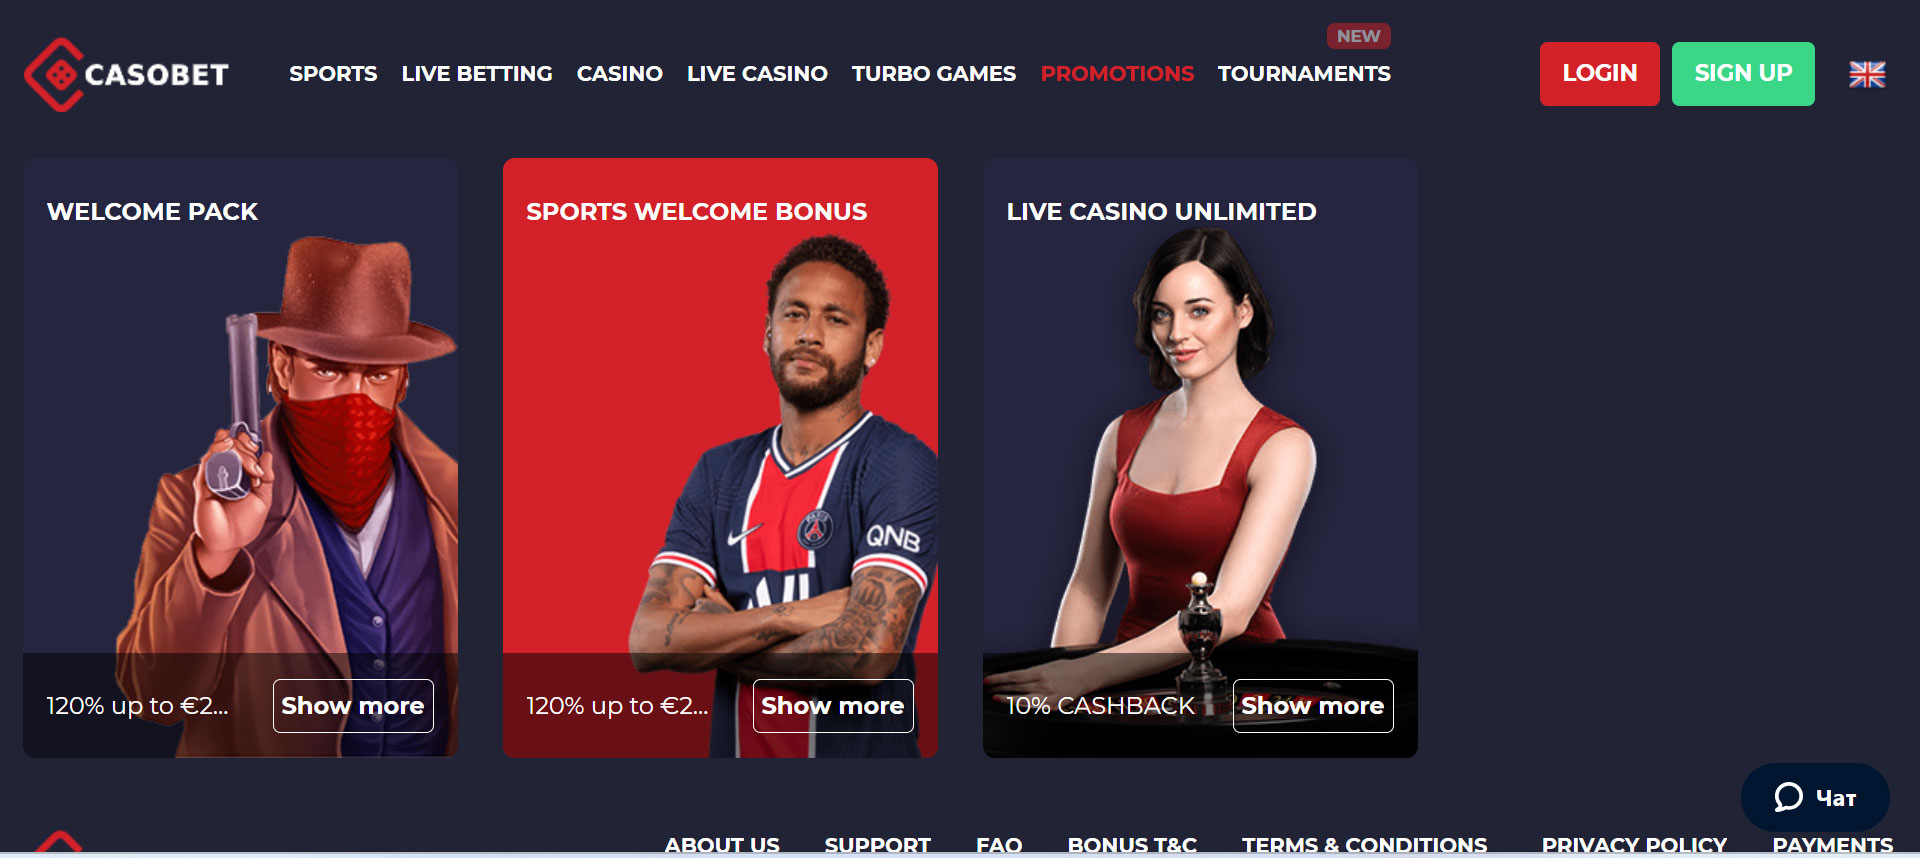 Casobet Casino Promotions